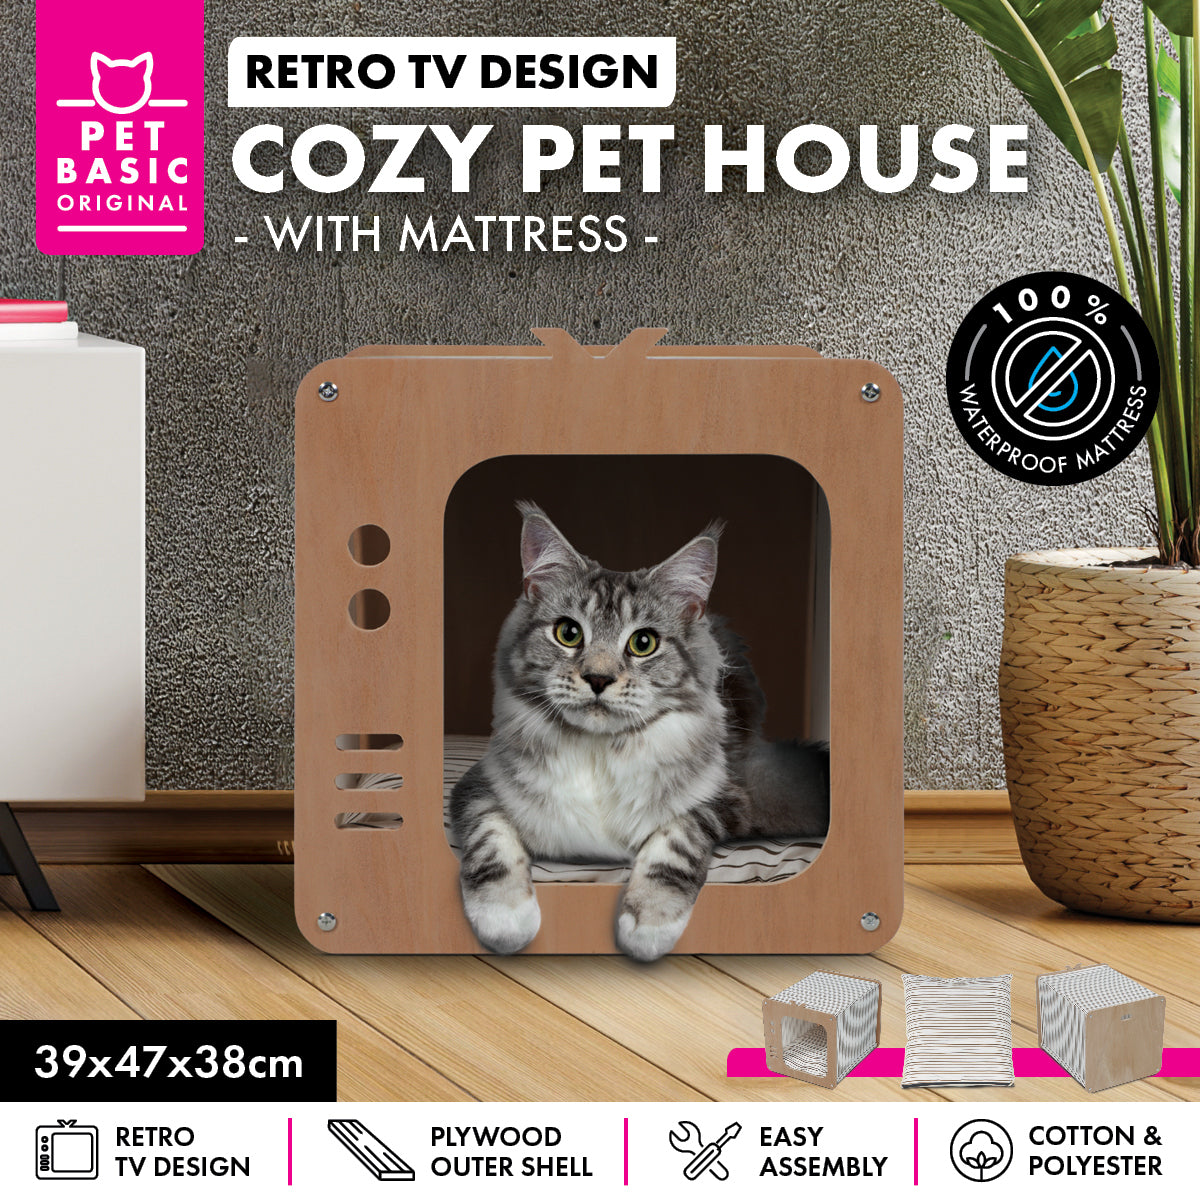 Pet Basic Retro TV Cozy Cat House Waterproof Mattress 39 x 47 x 38cm